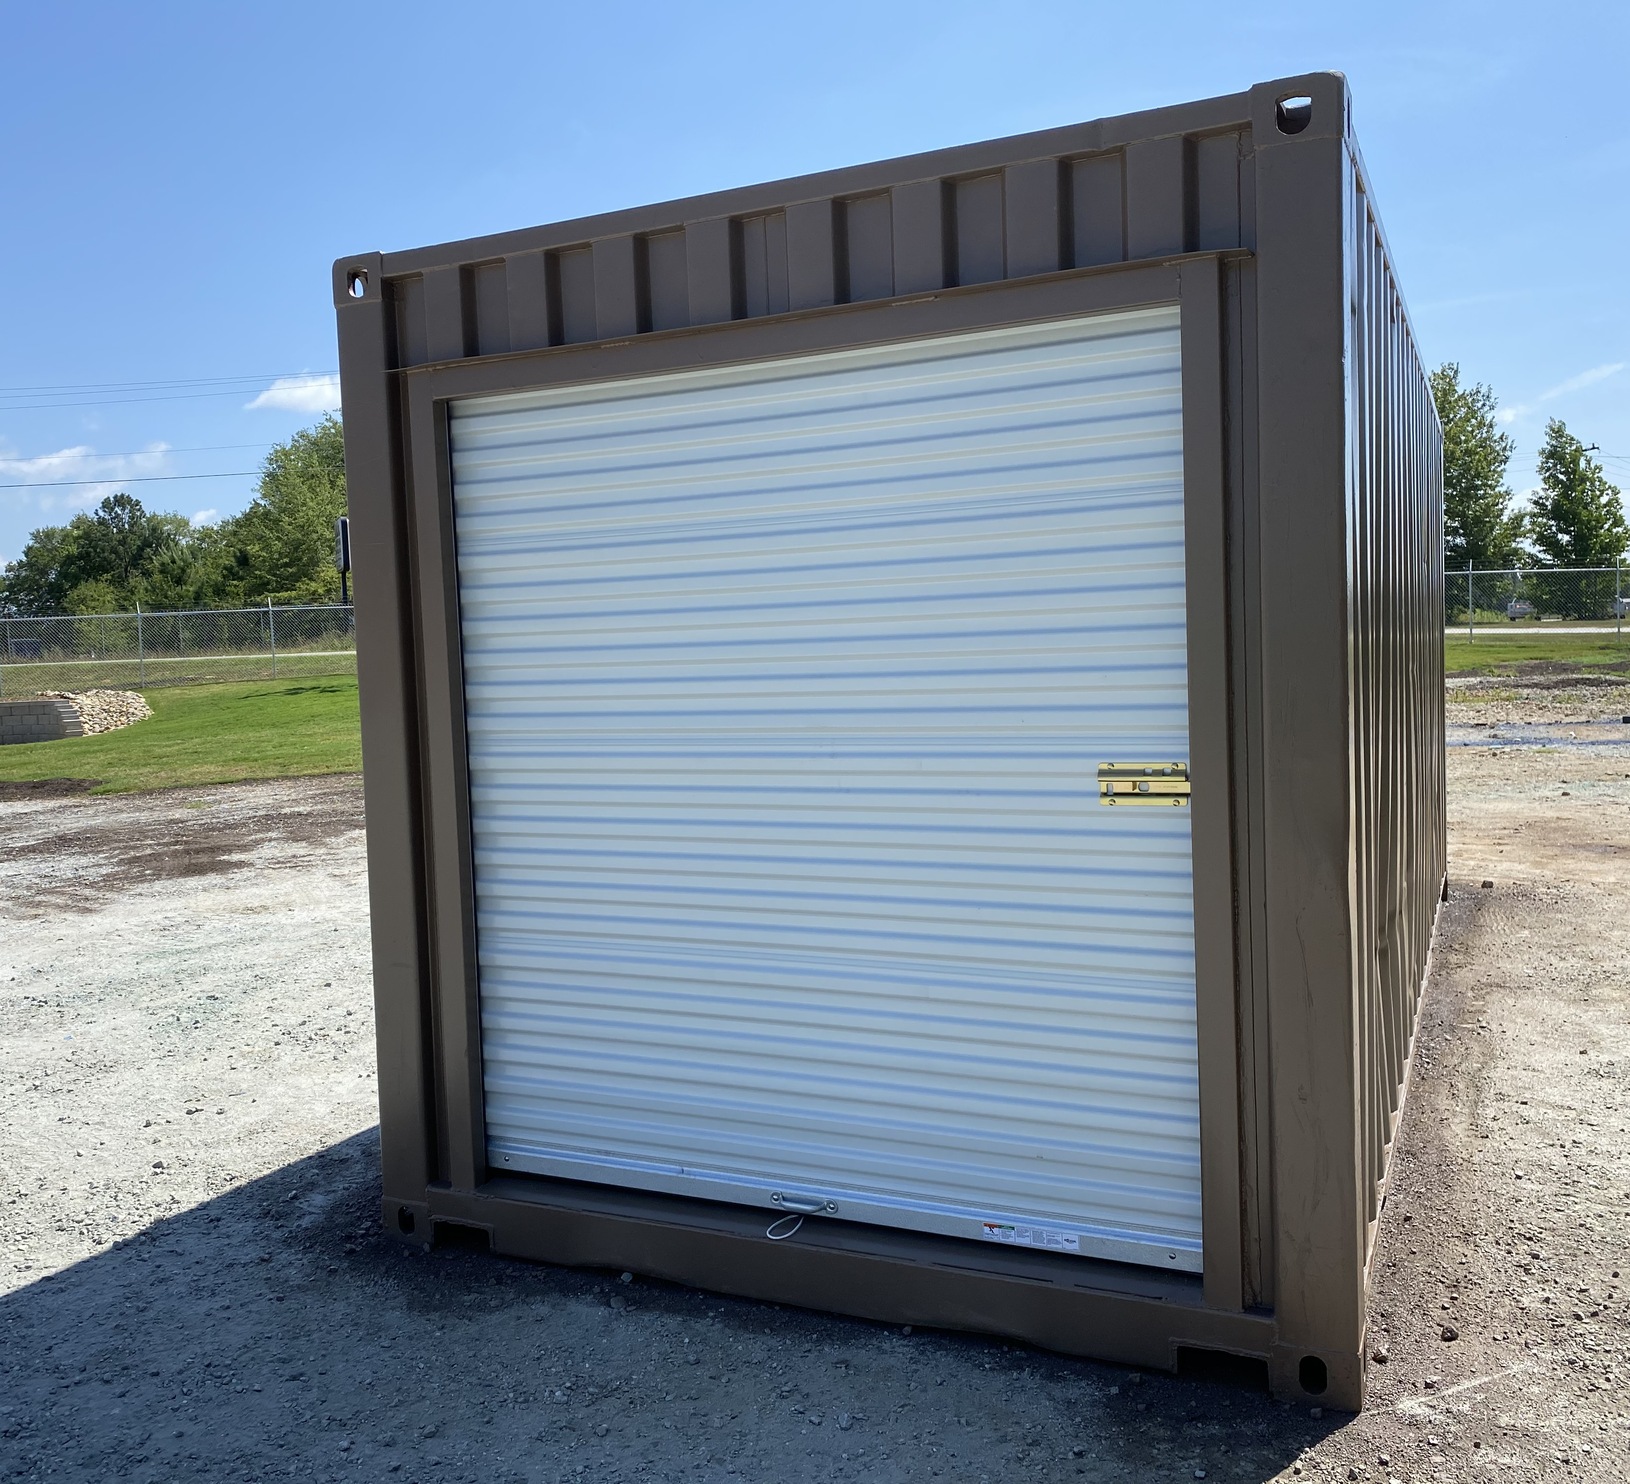 Storage container with roll up door